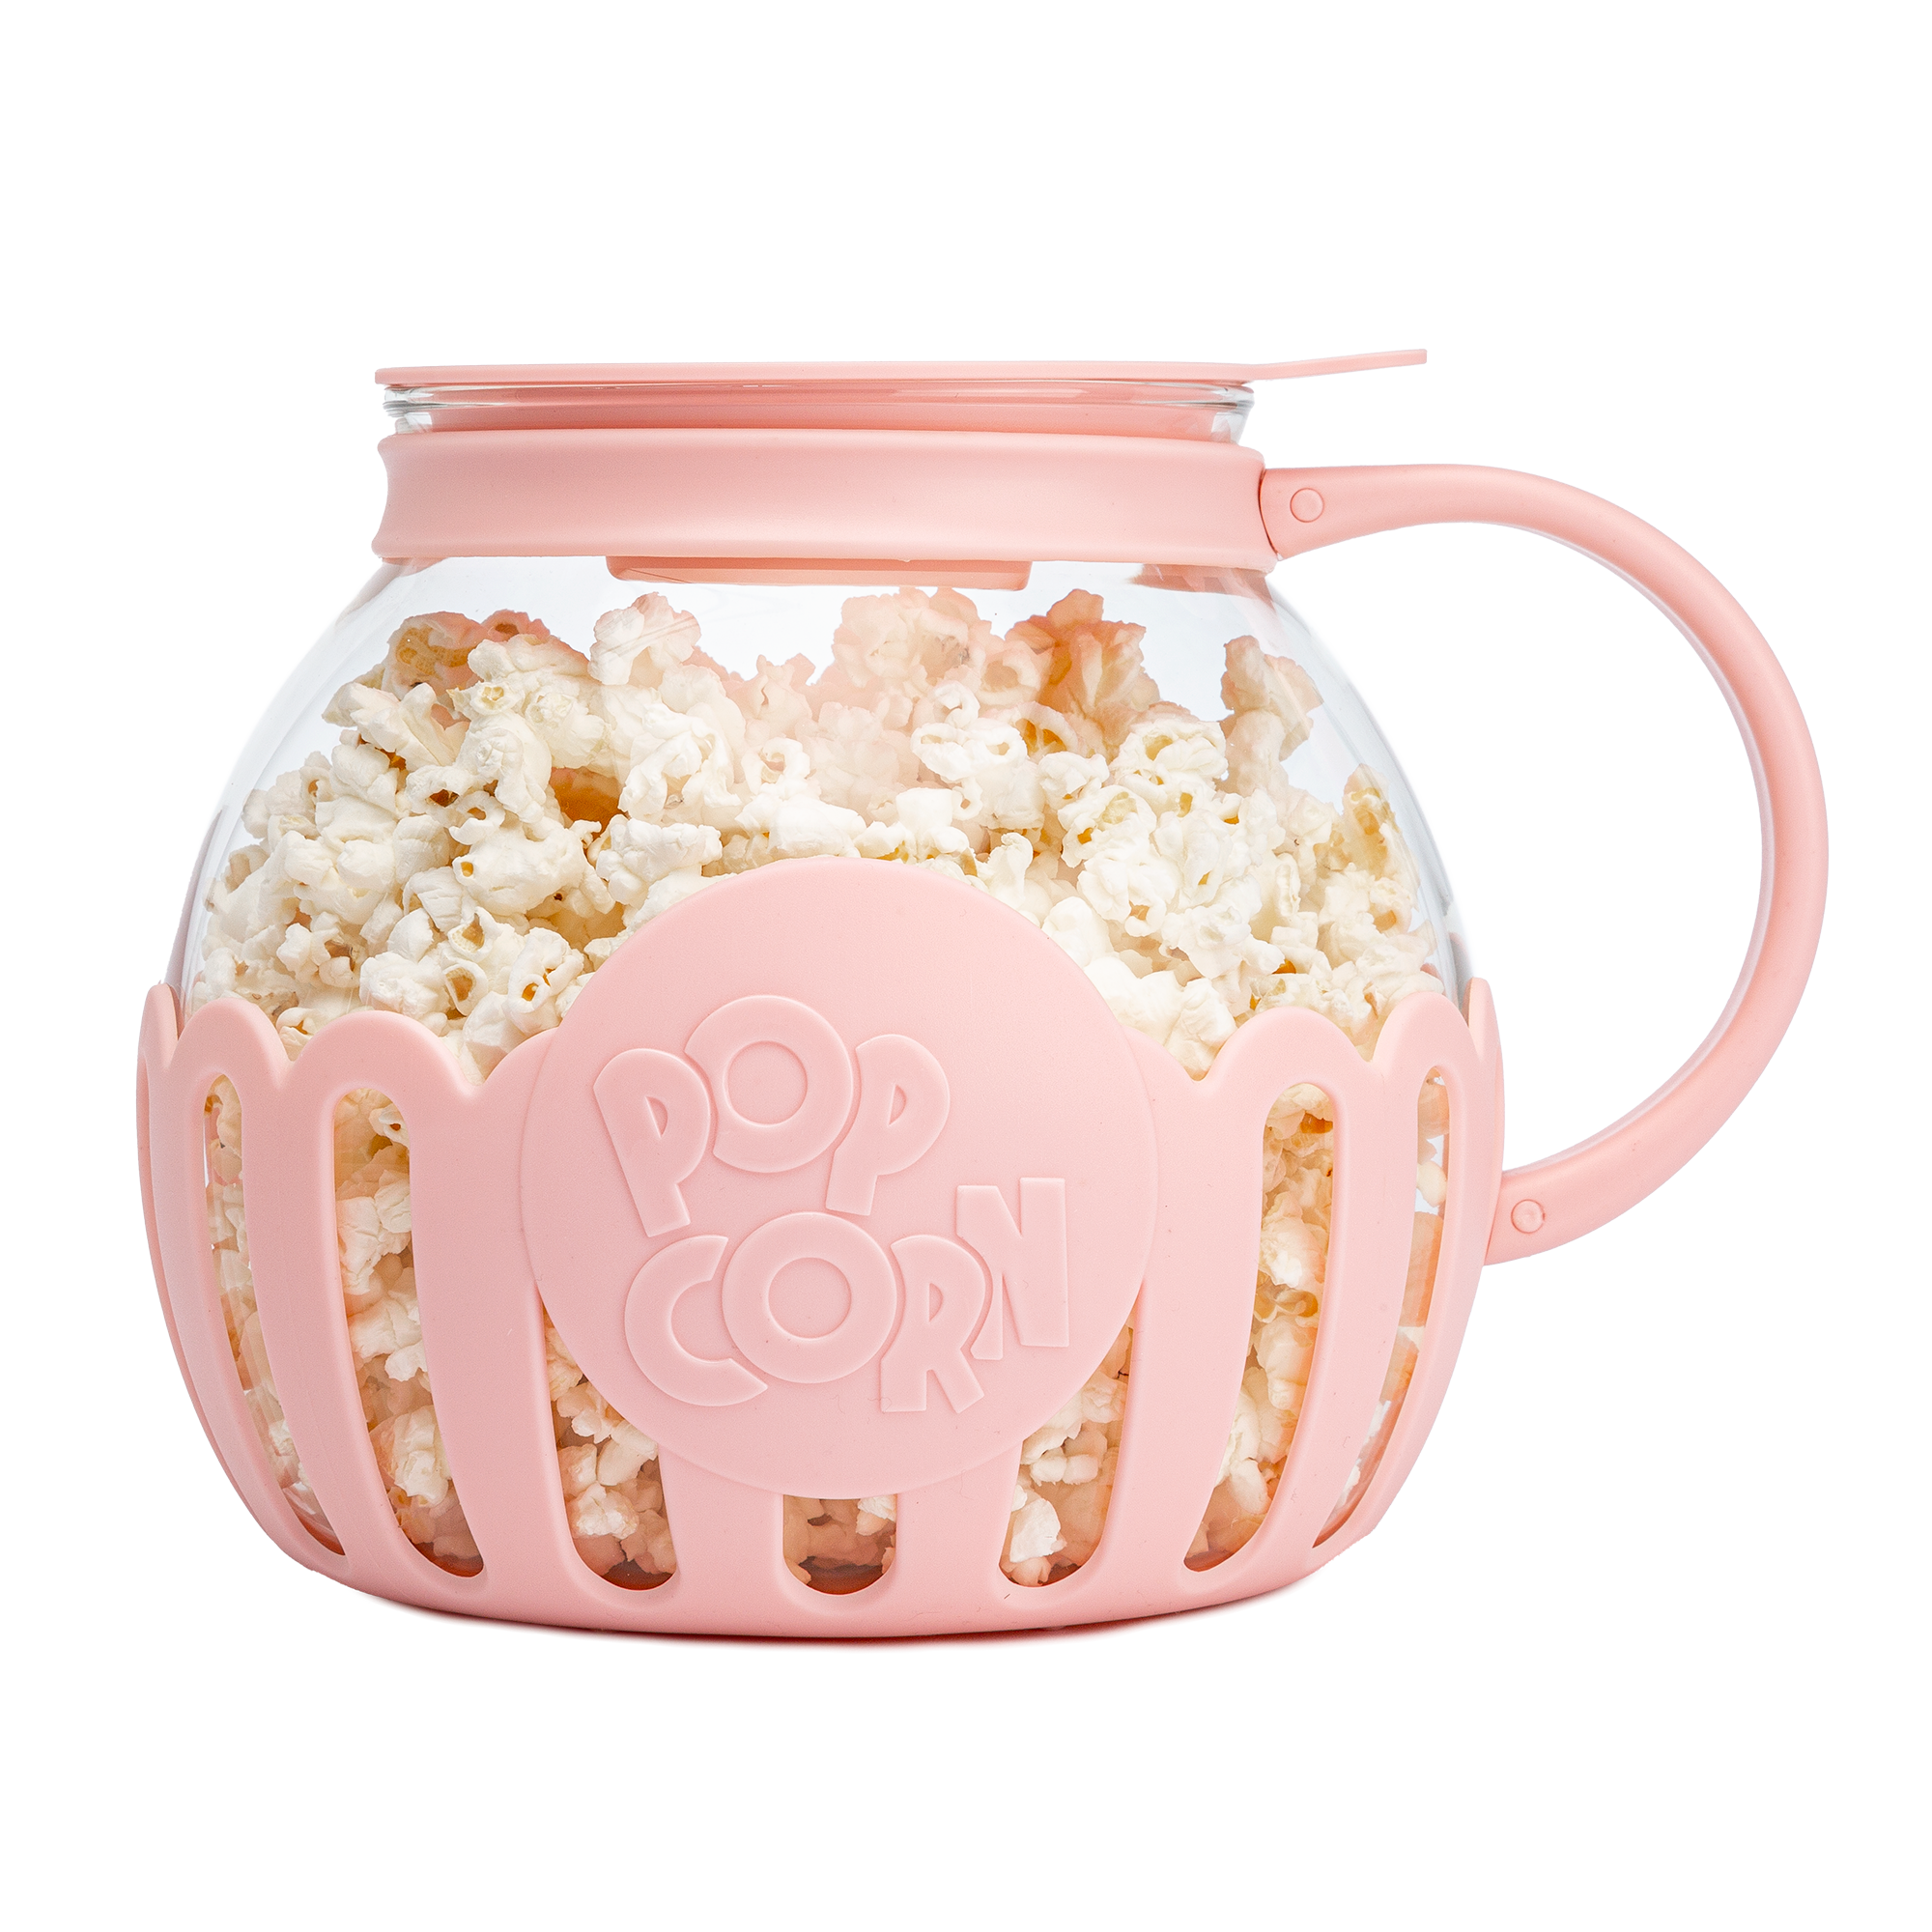 Paris Hilton Microwave Popcorn Popper, Dishwasher Safe, 3.3-Quart, Pink - image 1 of 9